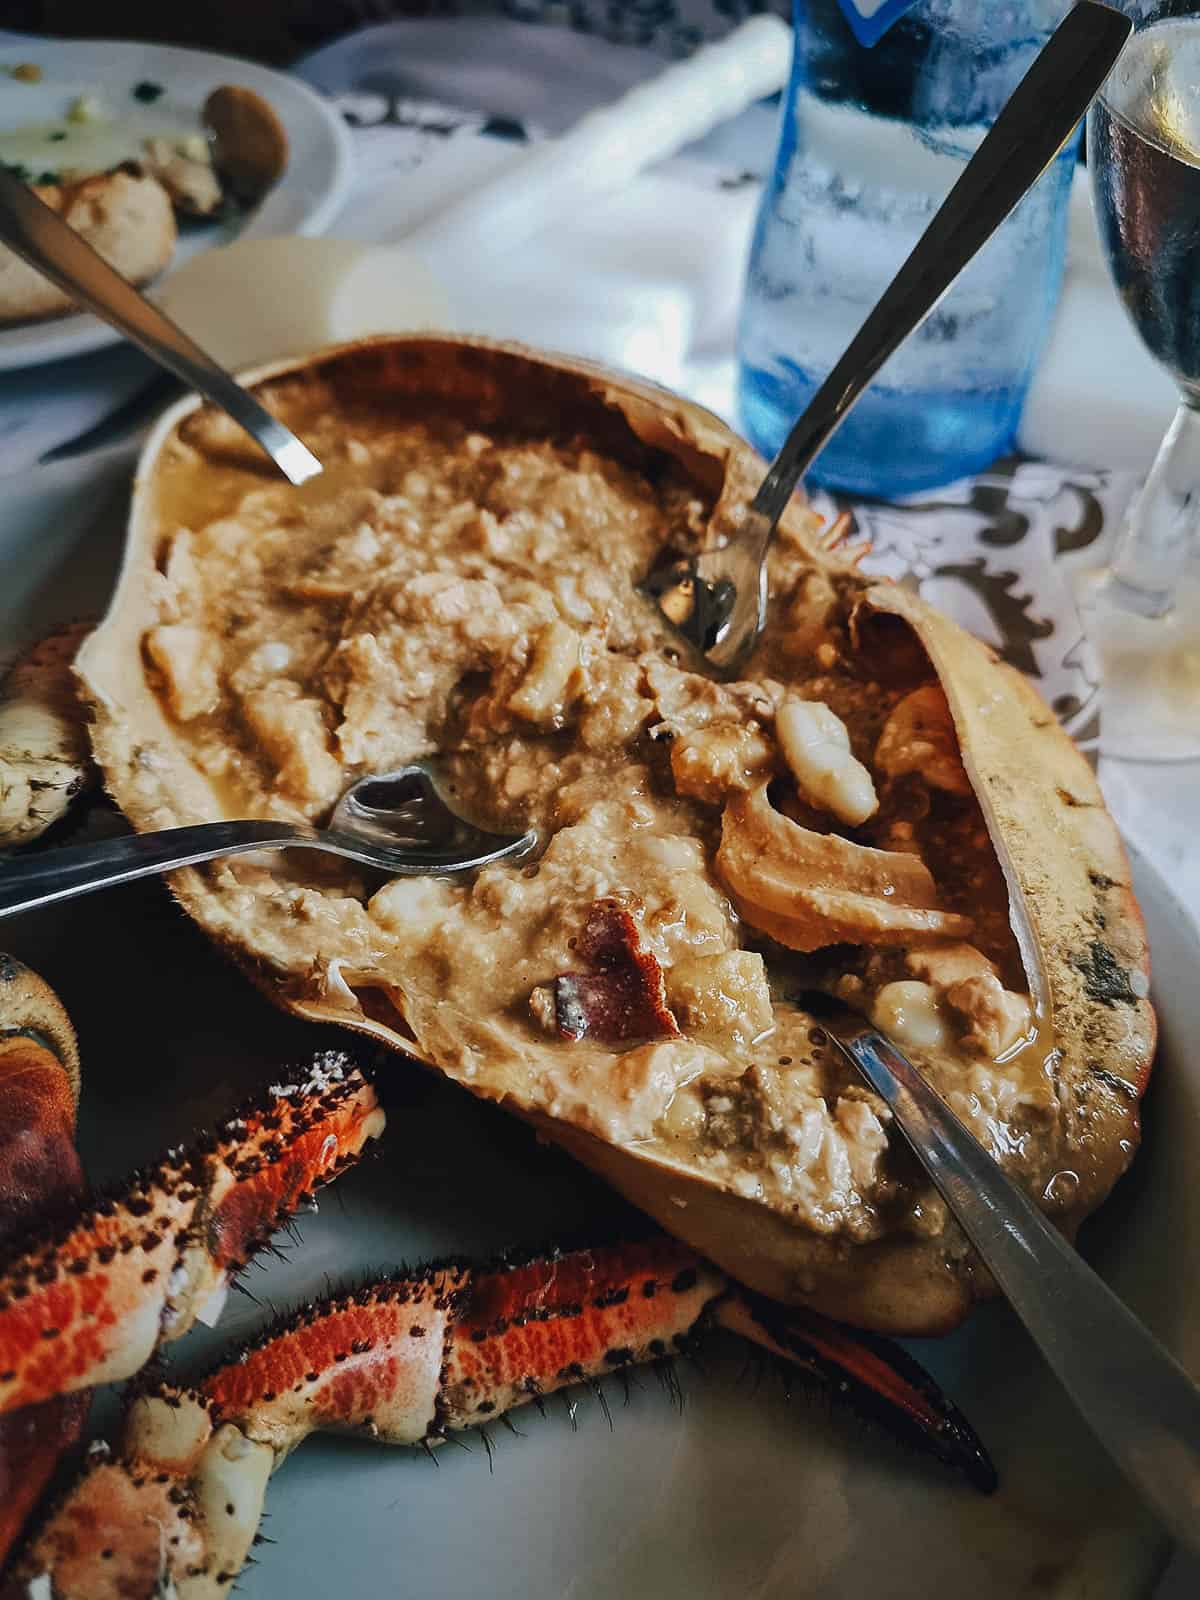 Portuguese-style crab dish at Cervejaria Ramiro in Lisbon, Portugal